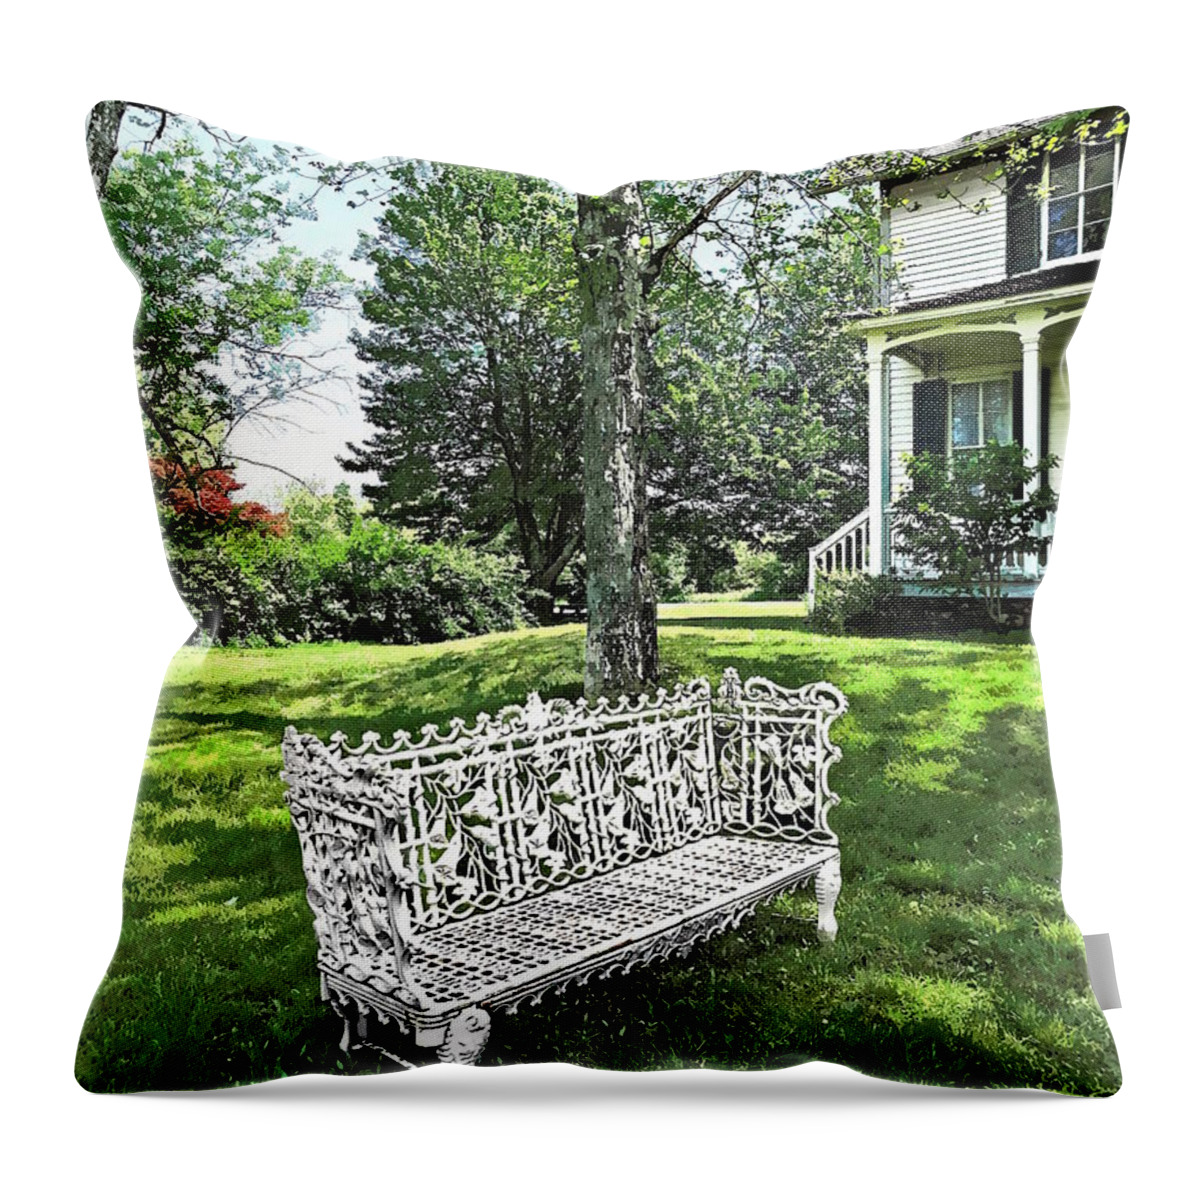 Bench Throw Pillow featuring the photograph Garden Bench by Susan Savad